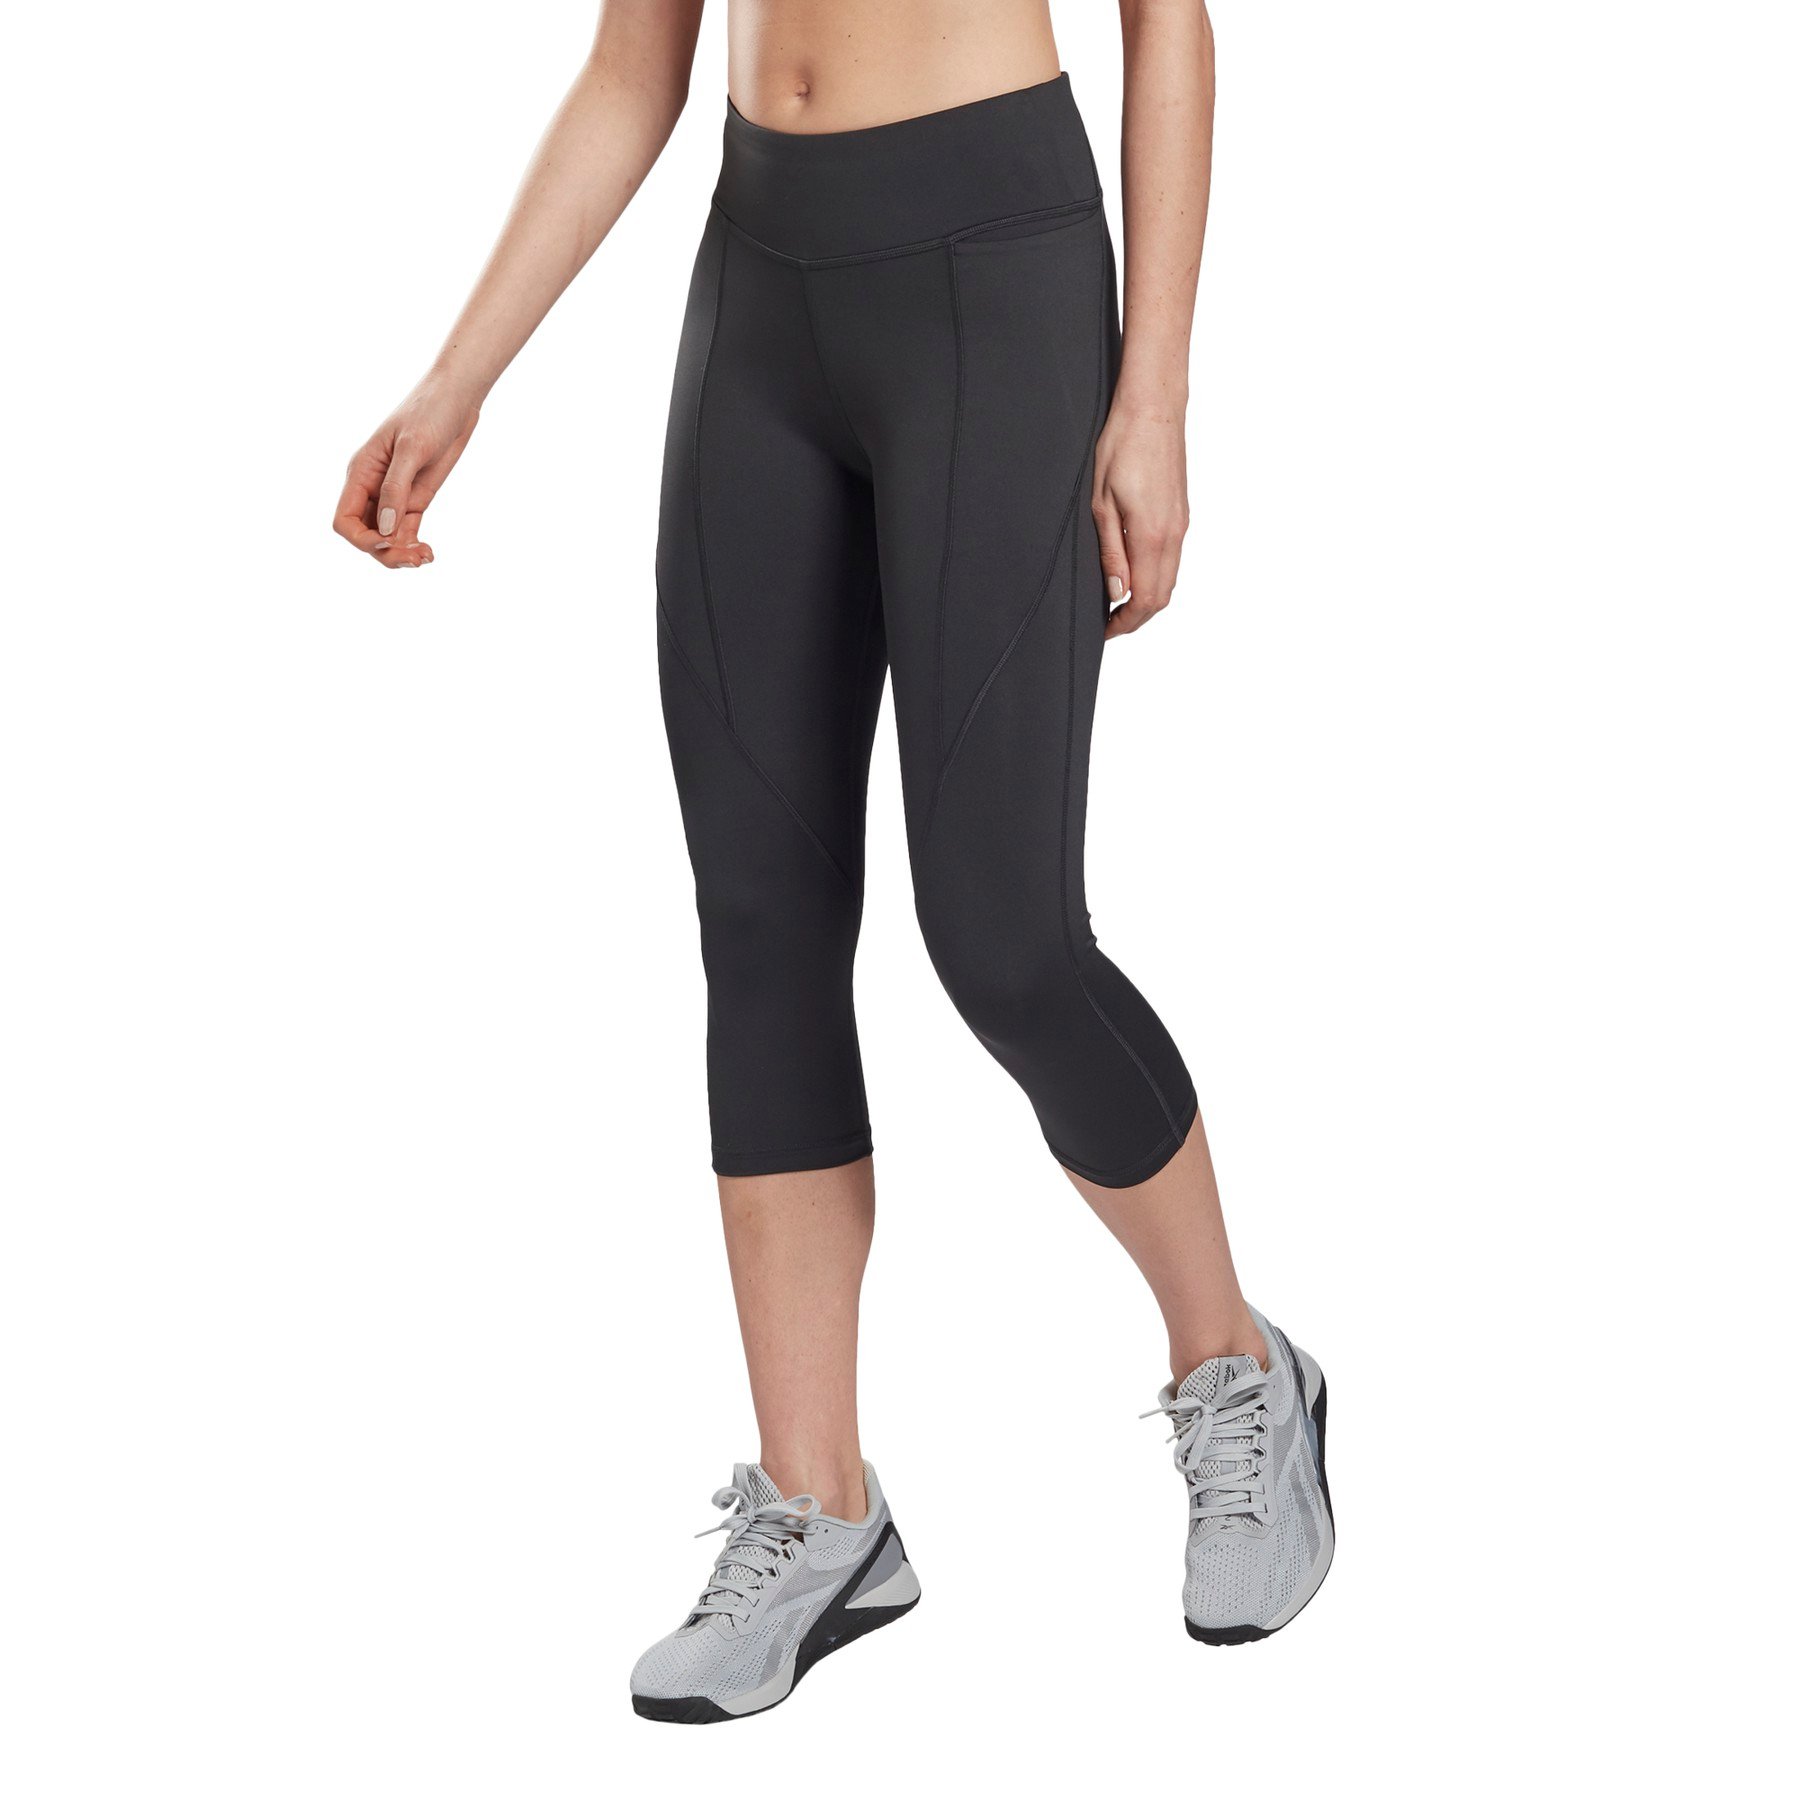 Roxy Shape Of You - Capri Workout Leggings For Women